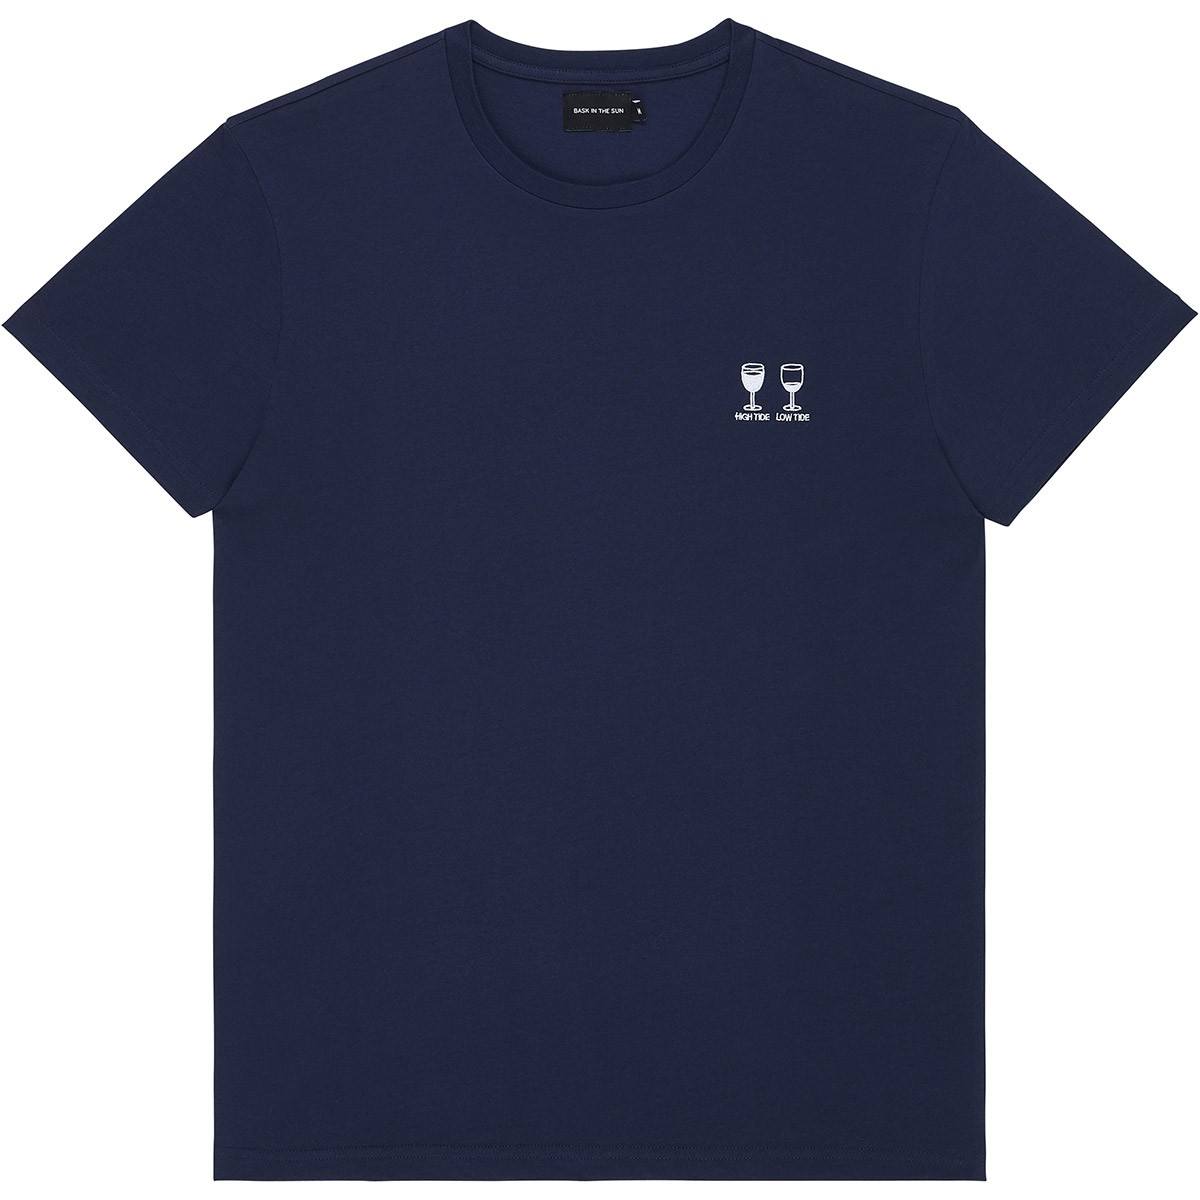 Bask in the sun - T-shirt bleu marine Mini Marees